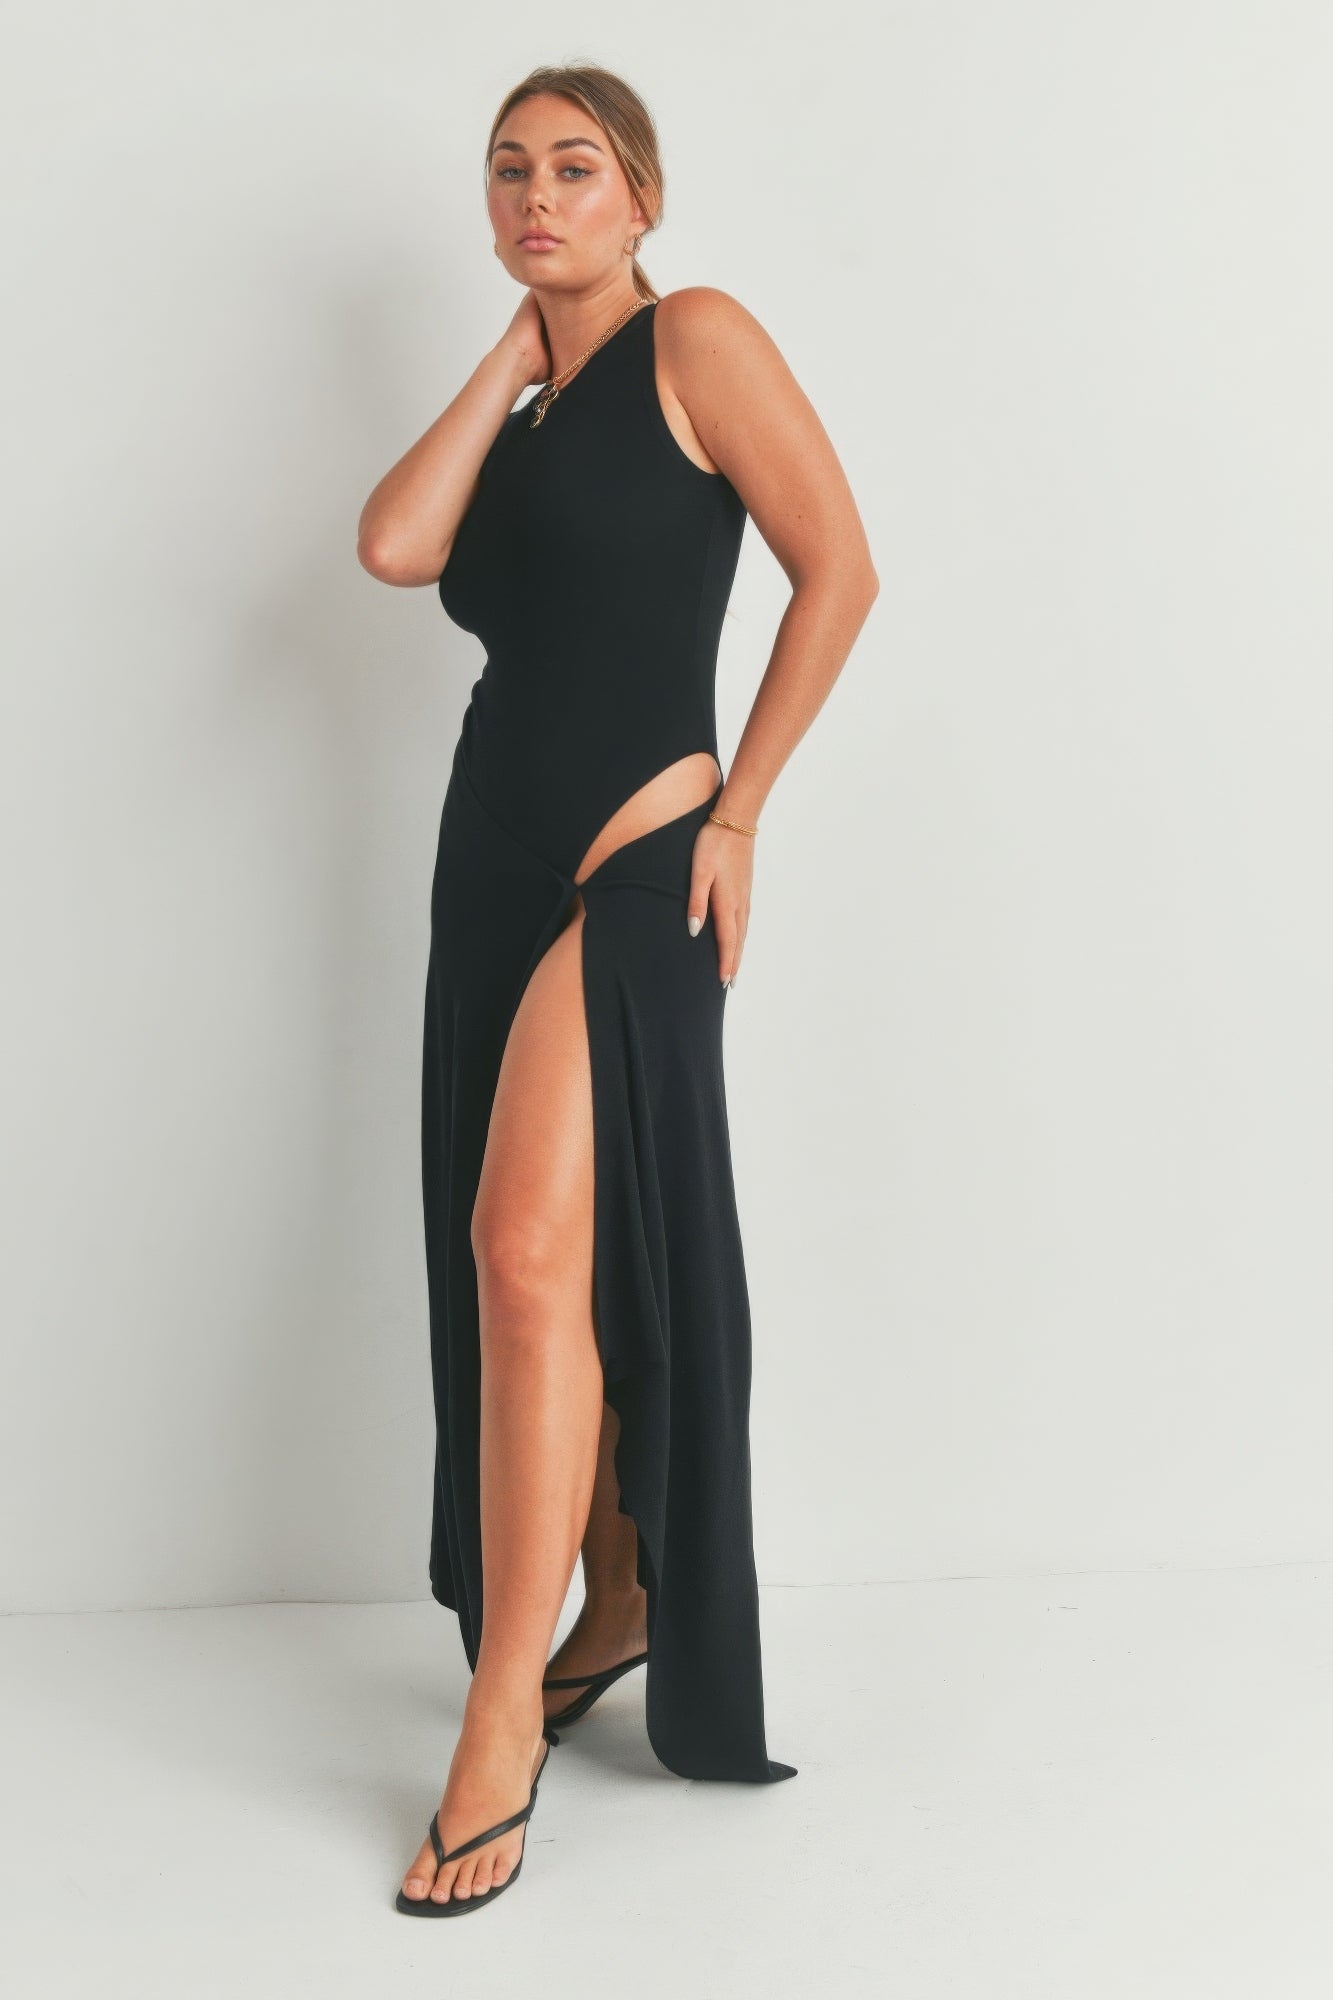 Black Sleeveless Maxi Dress With Slit - Tigbul's Variety Fashion Shop